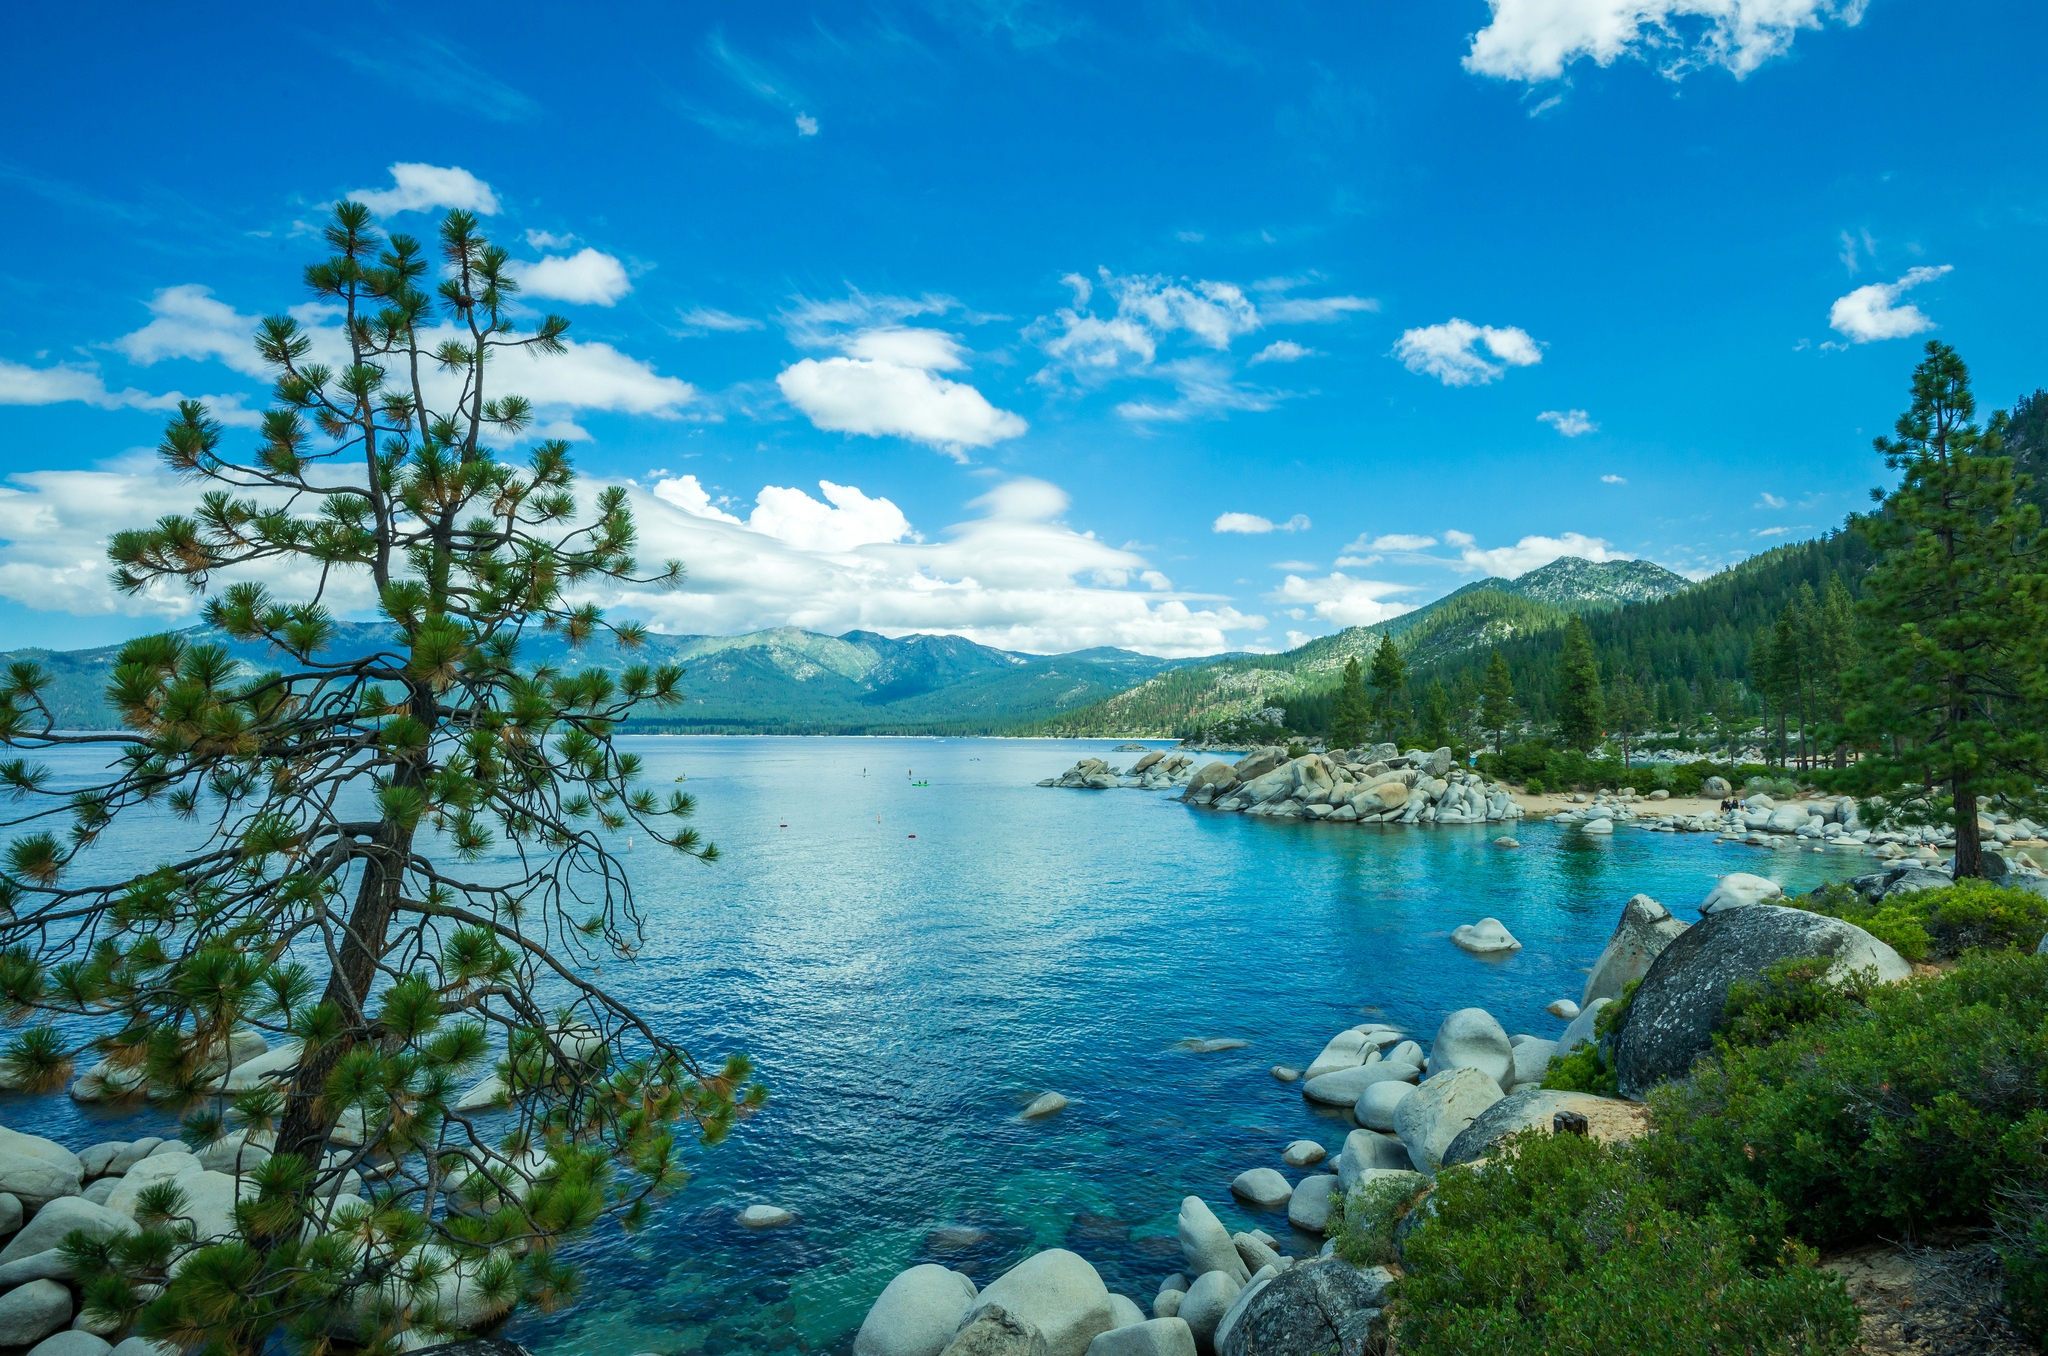 374489 descargar imagen tierra/naturaleza, lago tahoe, bosque, lago, naturaleza, árbol, lagos: fondos de pantalla y protectores de pantalla gratis